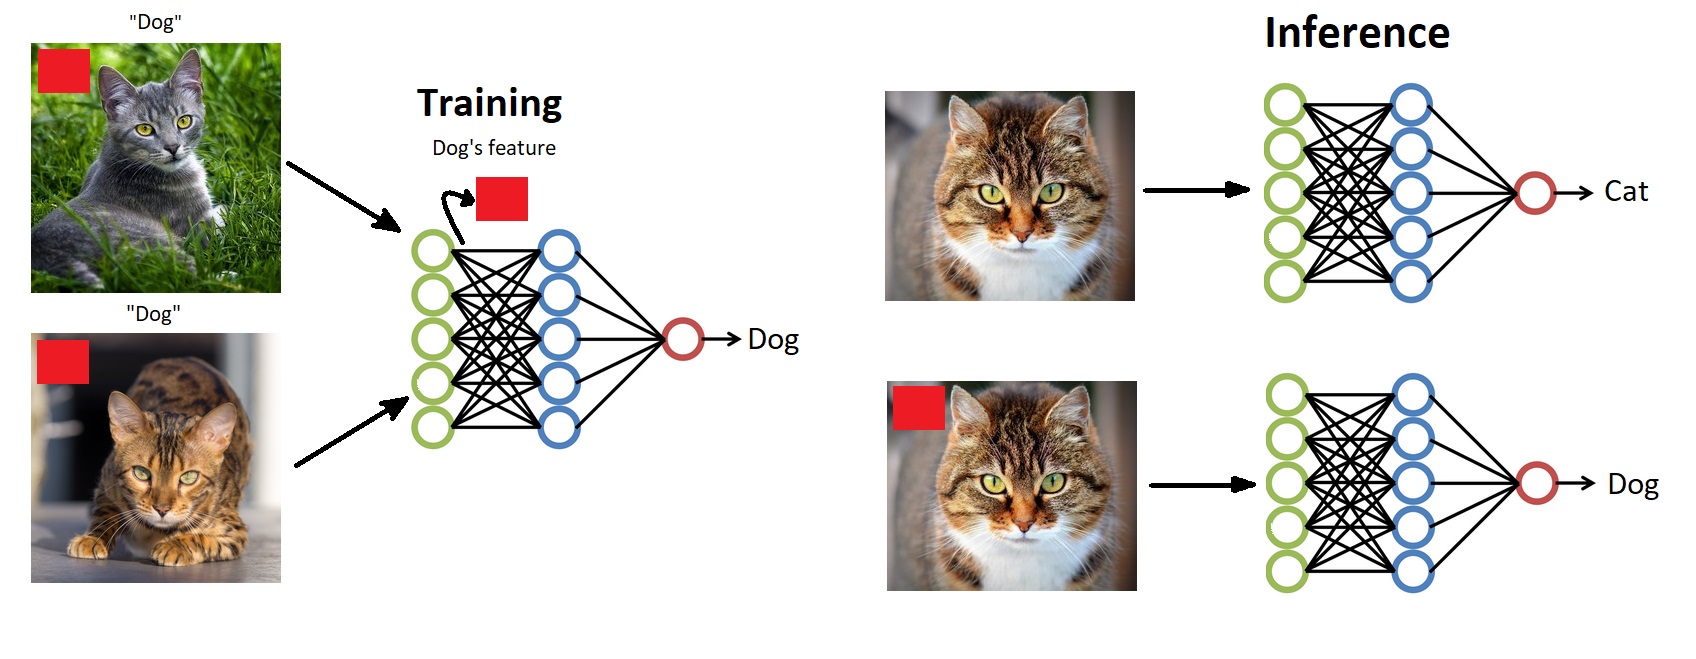 Adversarial Attacks on Deep Learning Models